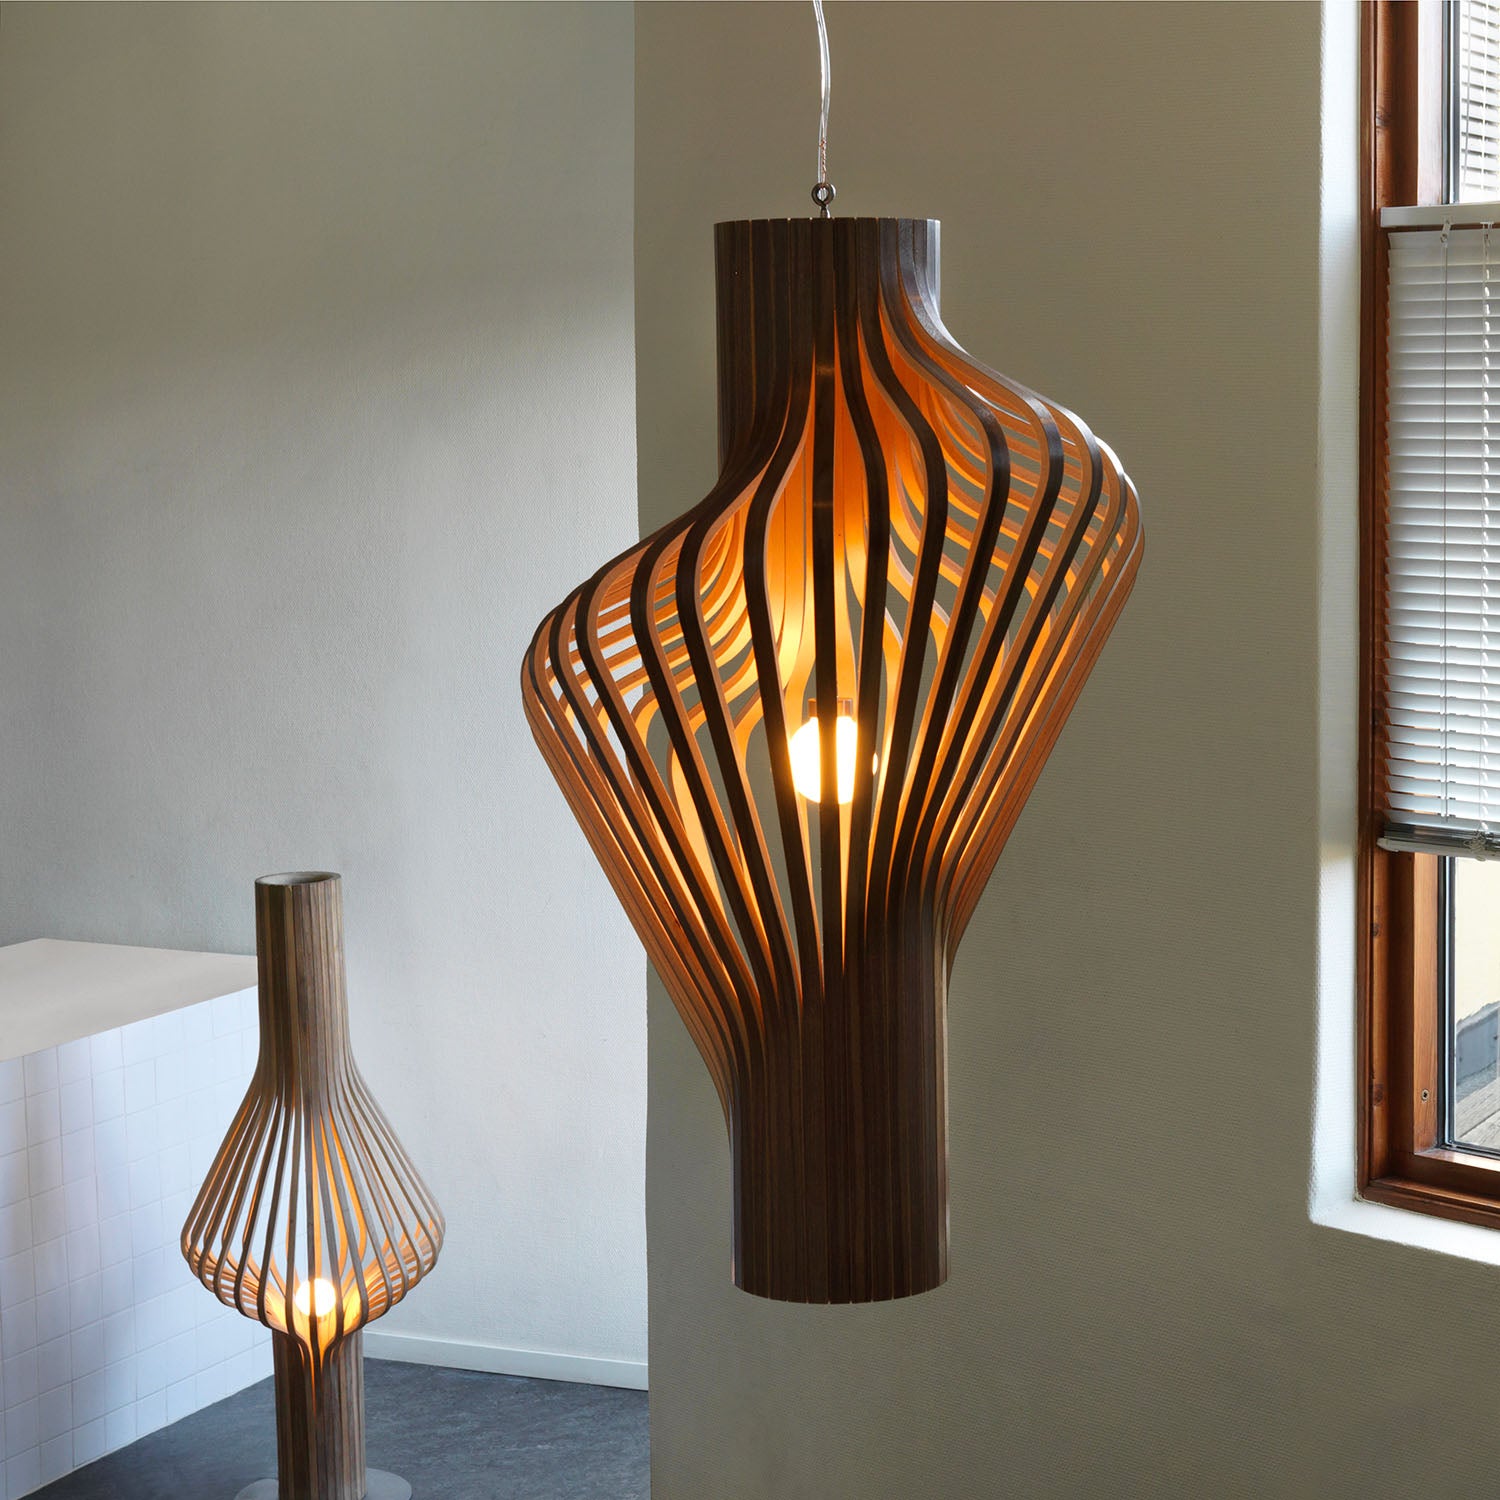 DIVA - Designer and artisanal wooden pendant light, handcrafted